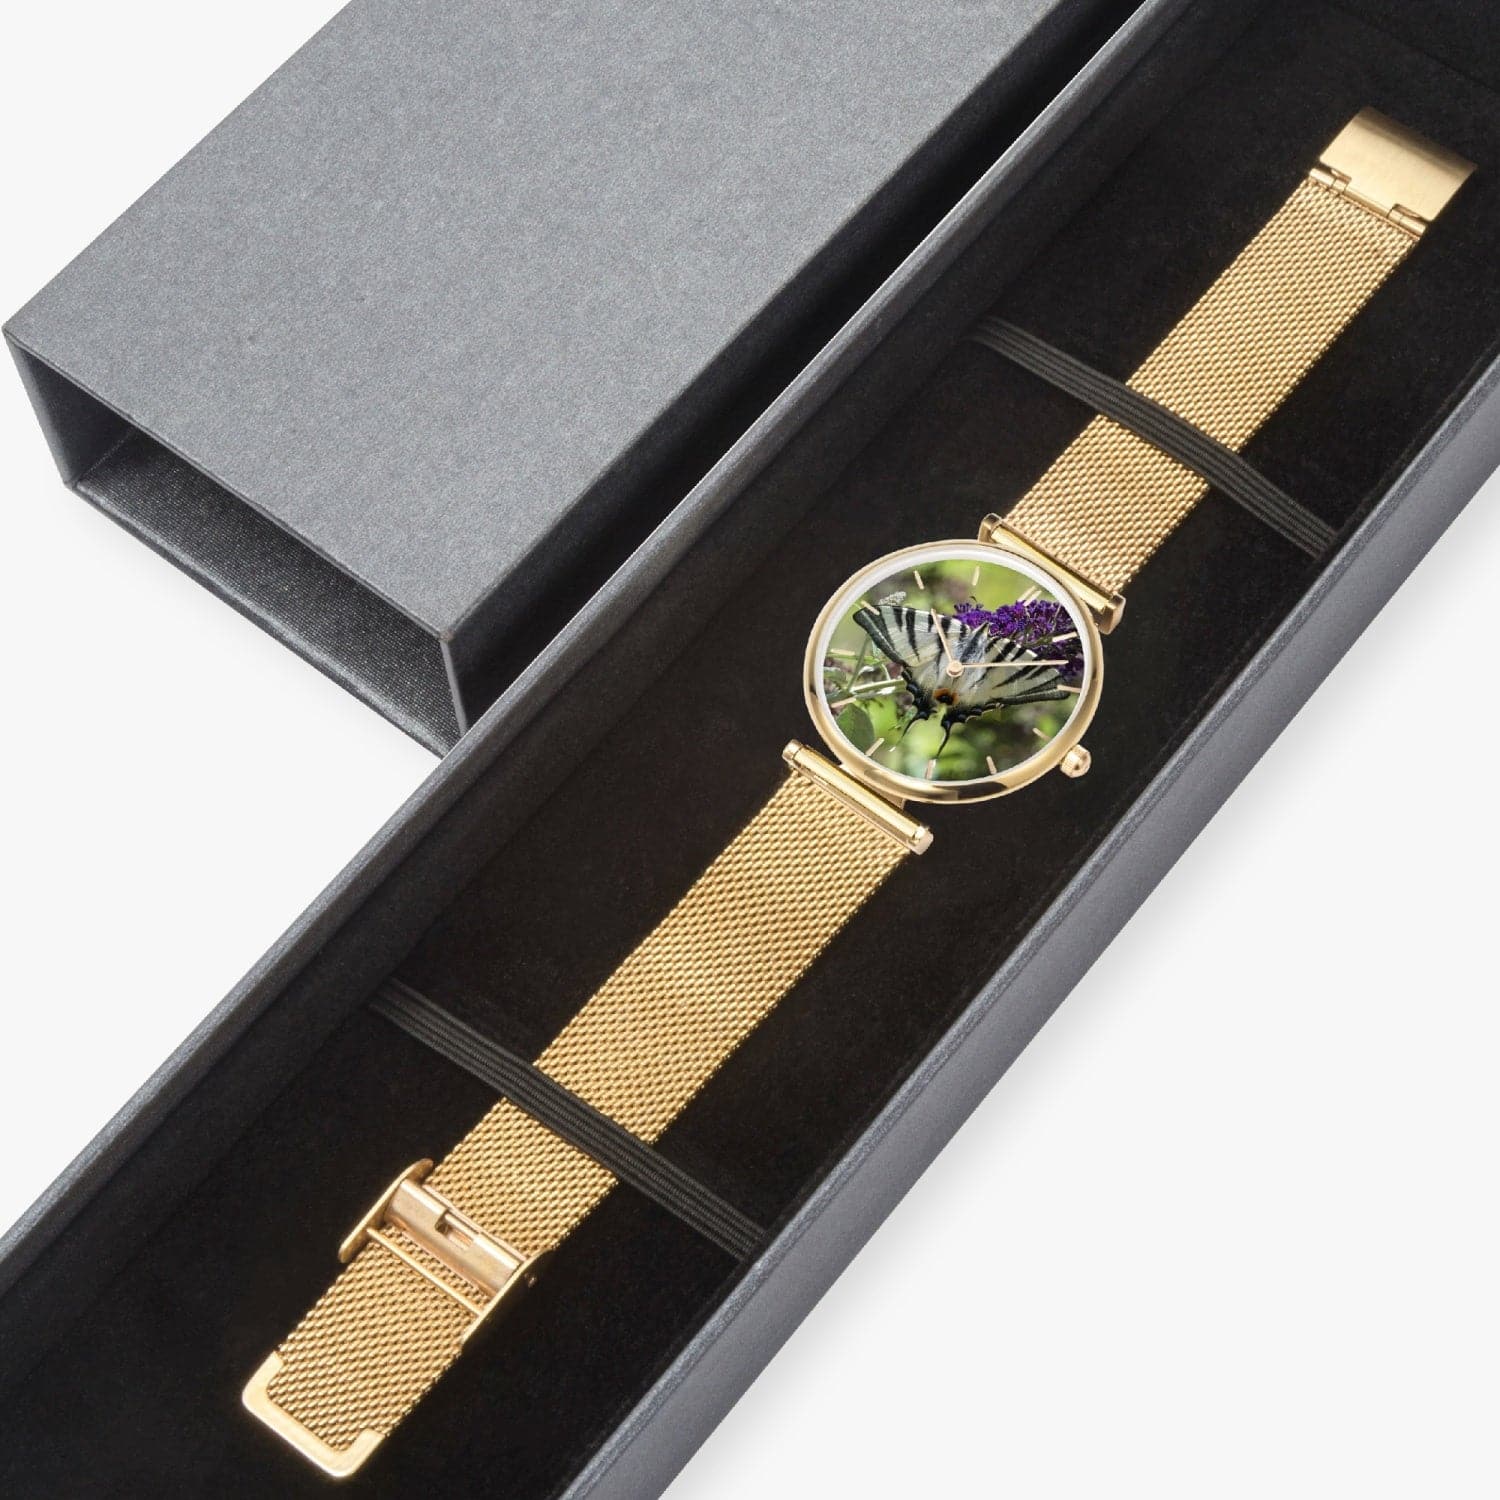 Butterfly II, New Stylish Ultra-Thin Quartz Watch. Designer watch by Sensus Studio design